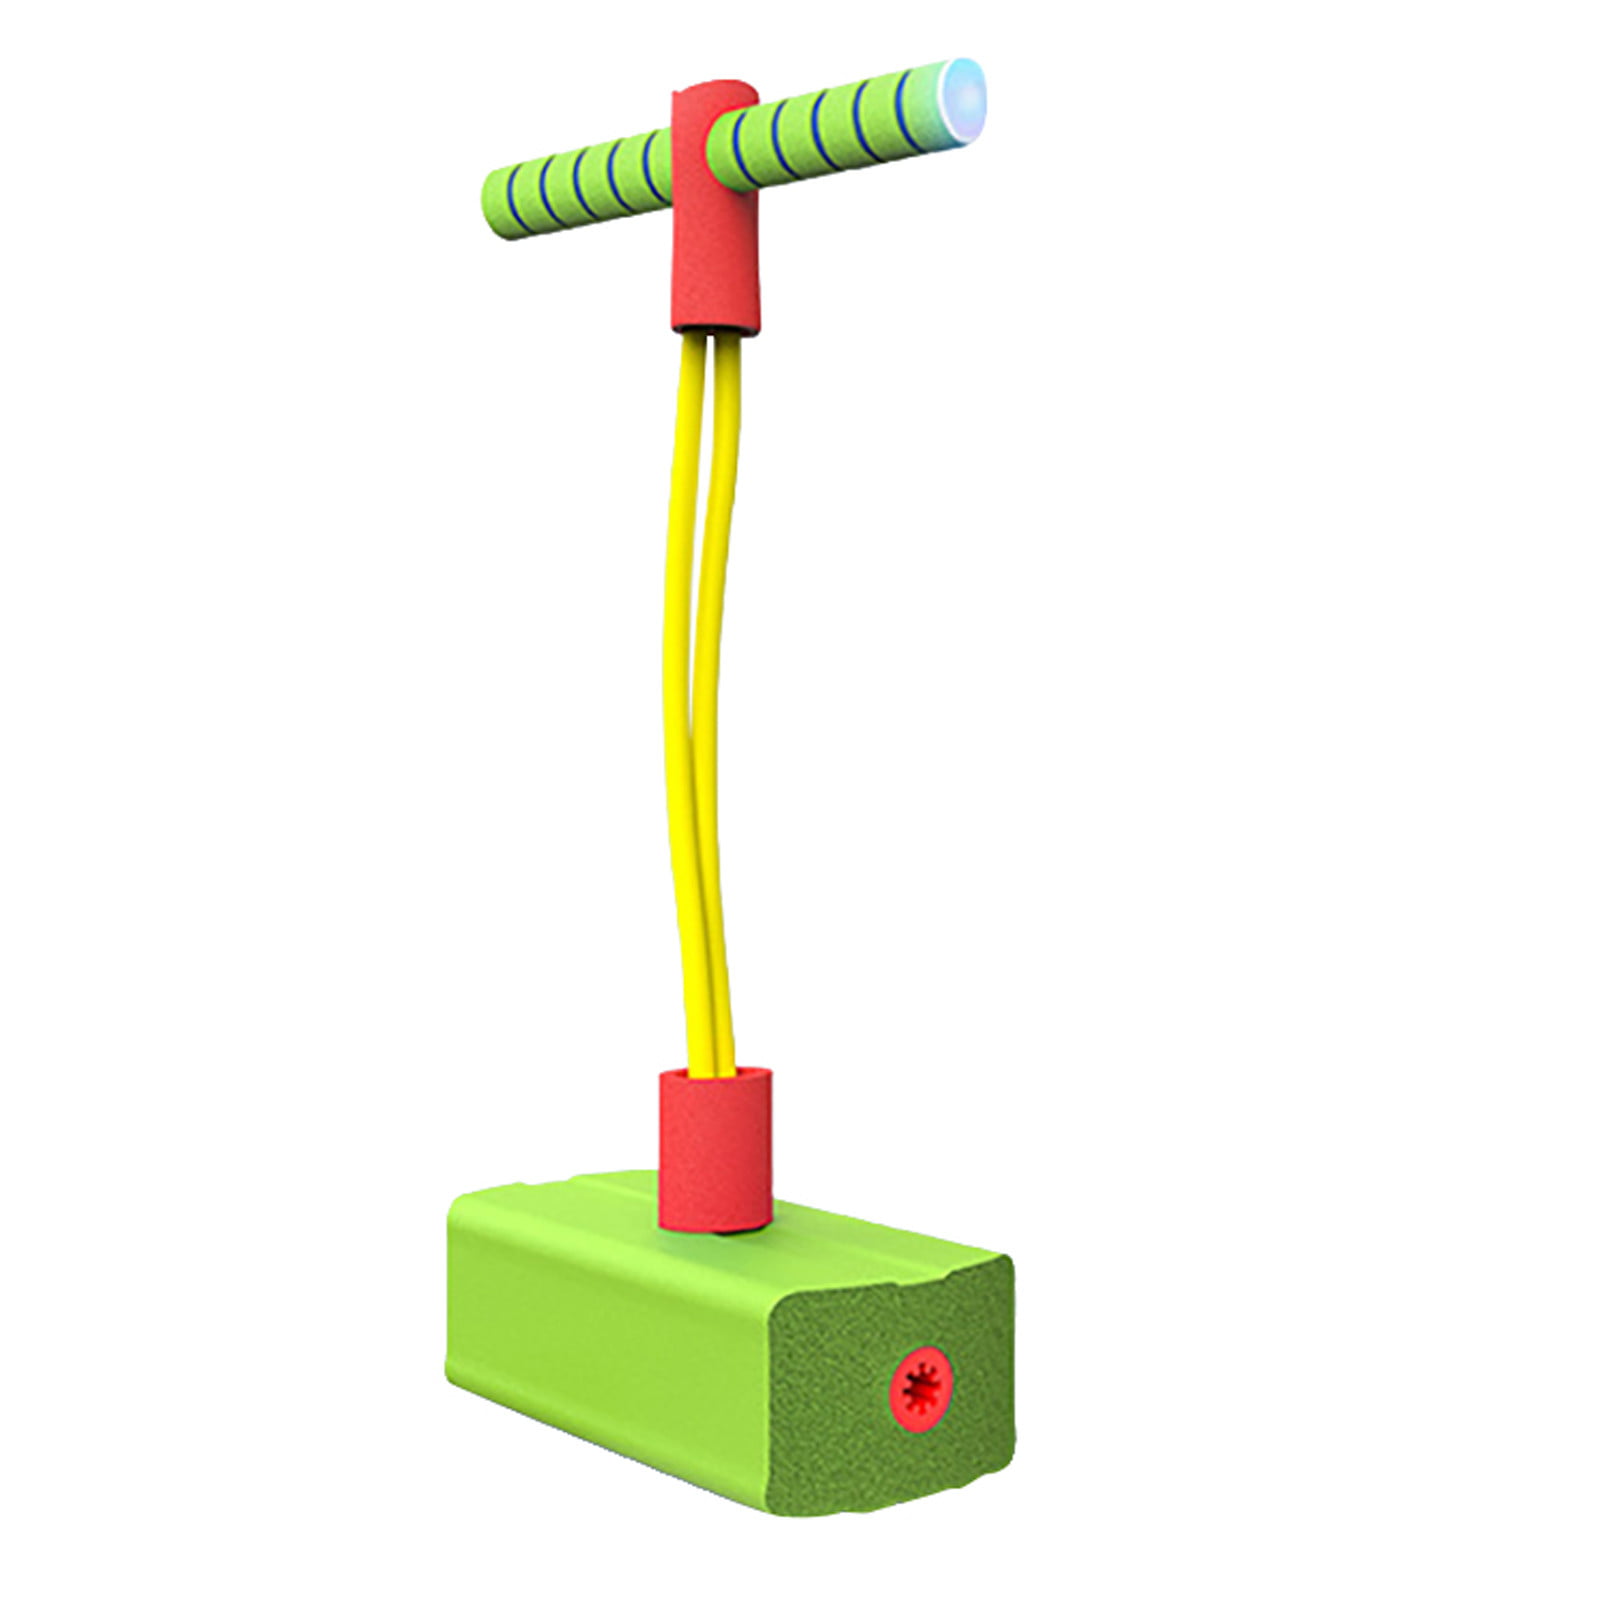 Details about   Durable Foam Pogo Jumper for Kids Fun Safe Pogo Stick Boys Girls Outdoor Toy 